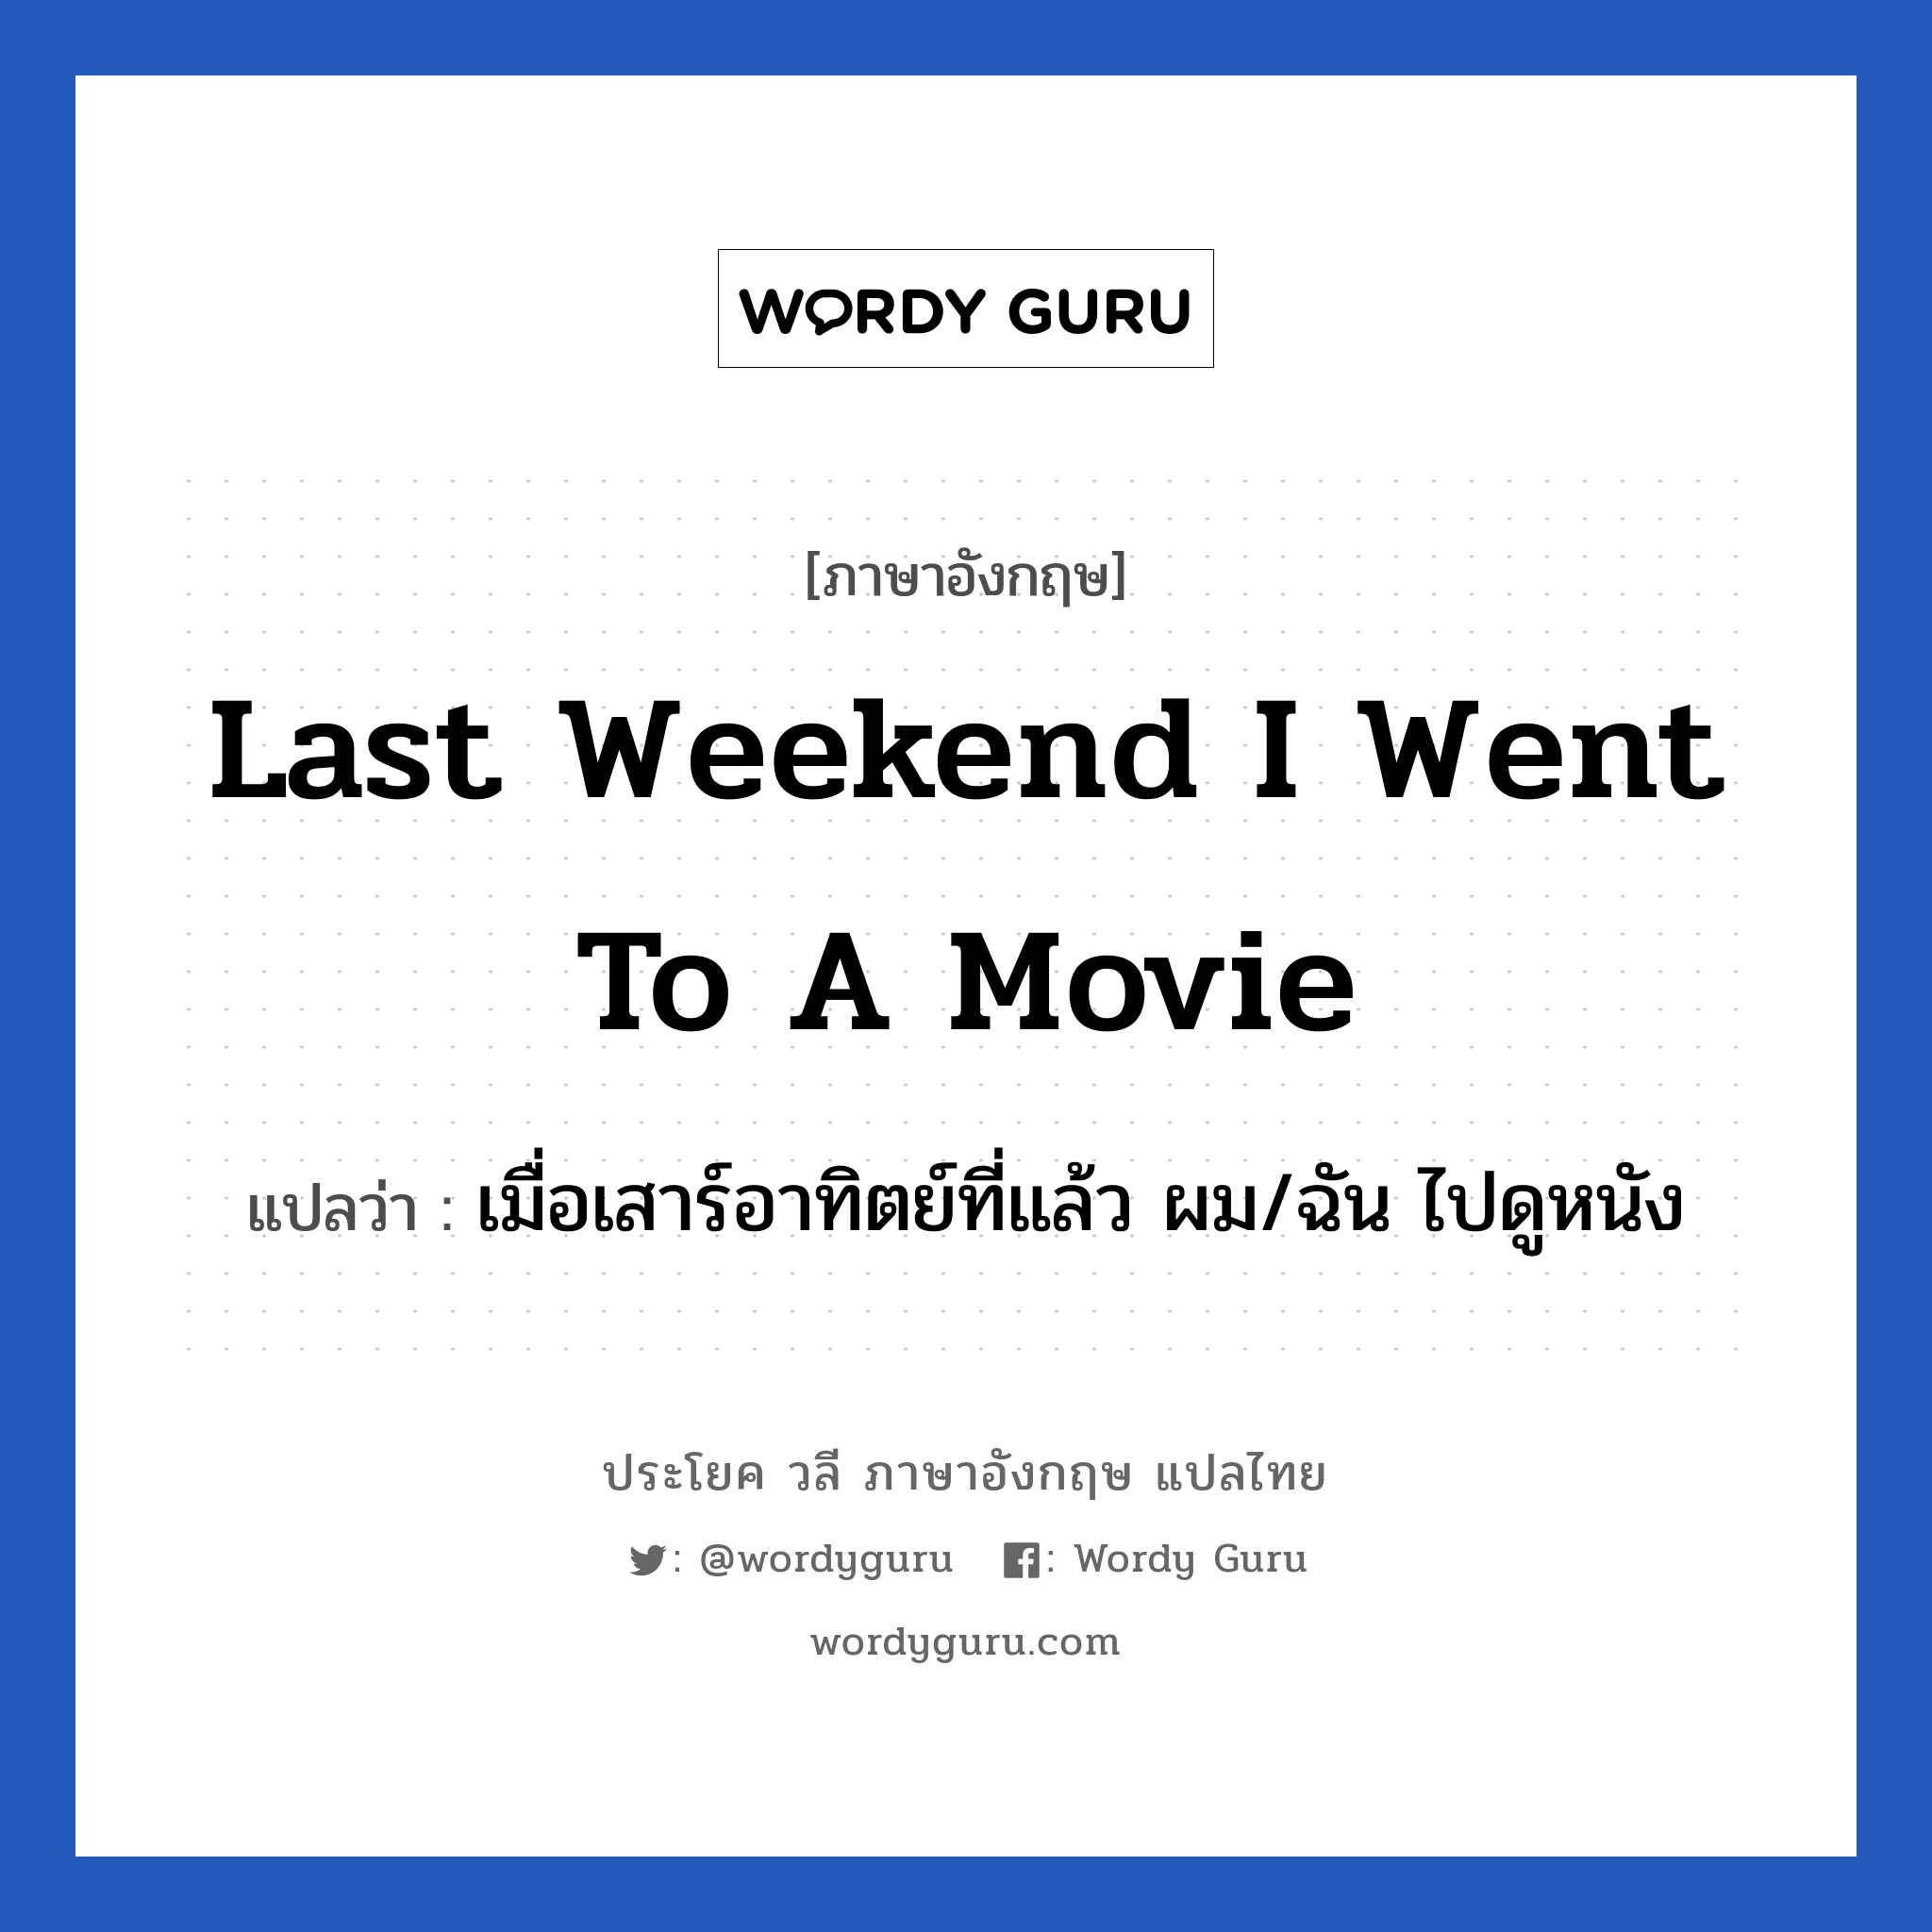 Last weekend I went to a movie แปลว่า?, วลีภาษาอังกฤษ Last weekend I went to a movie แปลว่า เมื่อเสาร์อาทิตย์ที่แล้ว ผม/ฉัน ไปดูหนัง